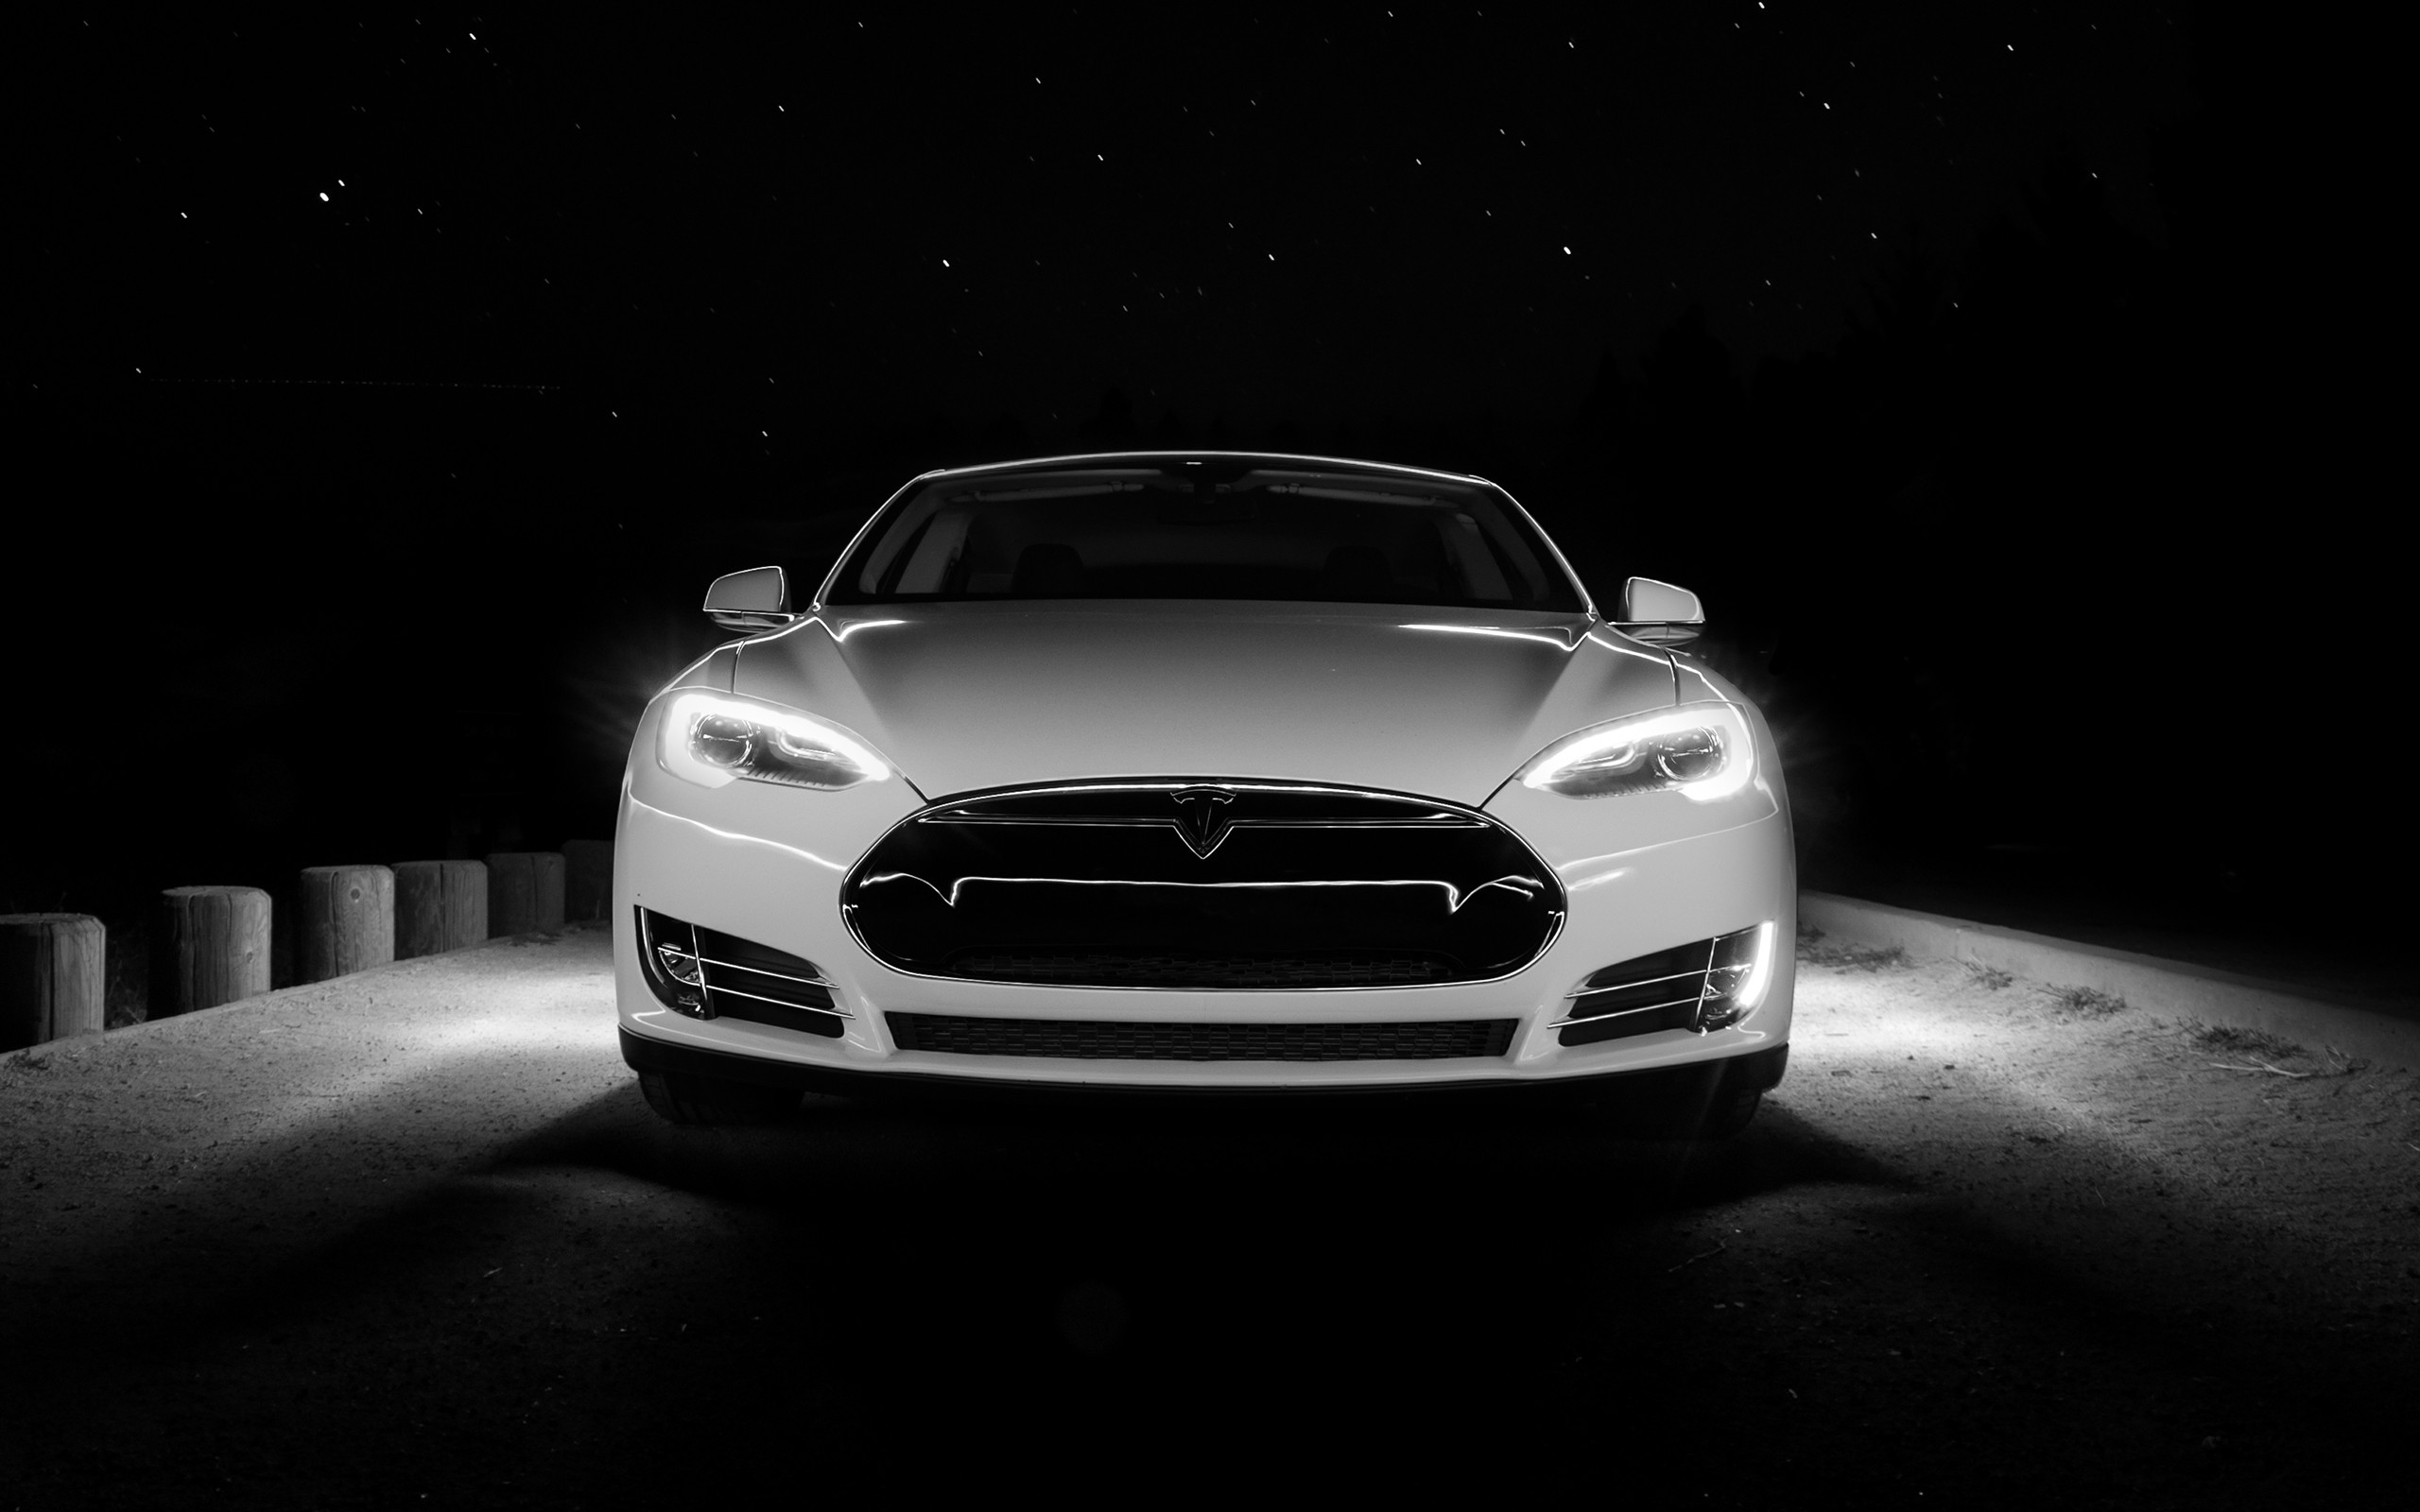 General 2560x1600 car Tesla Model S night Tesla vehicle monochrome